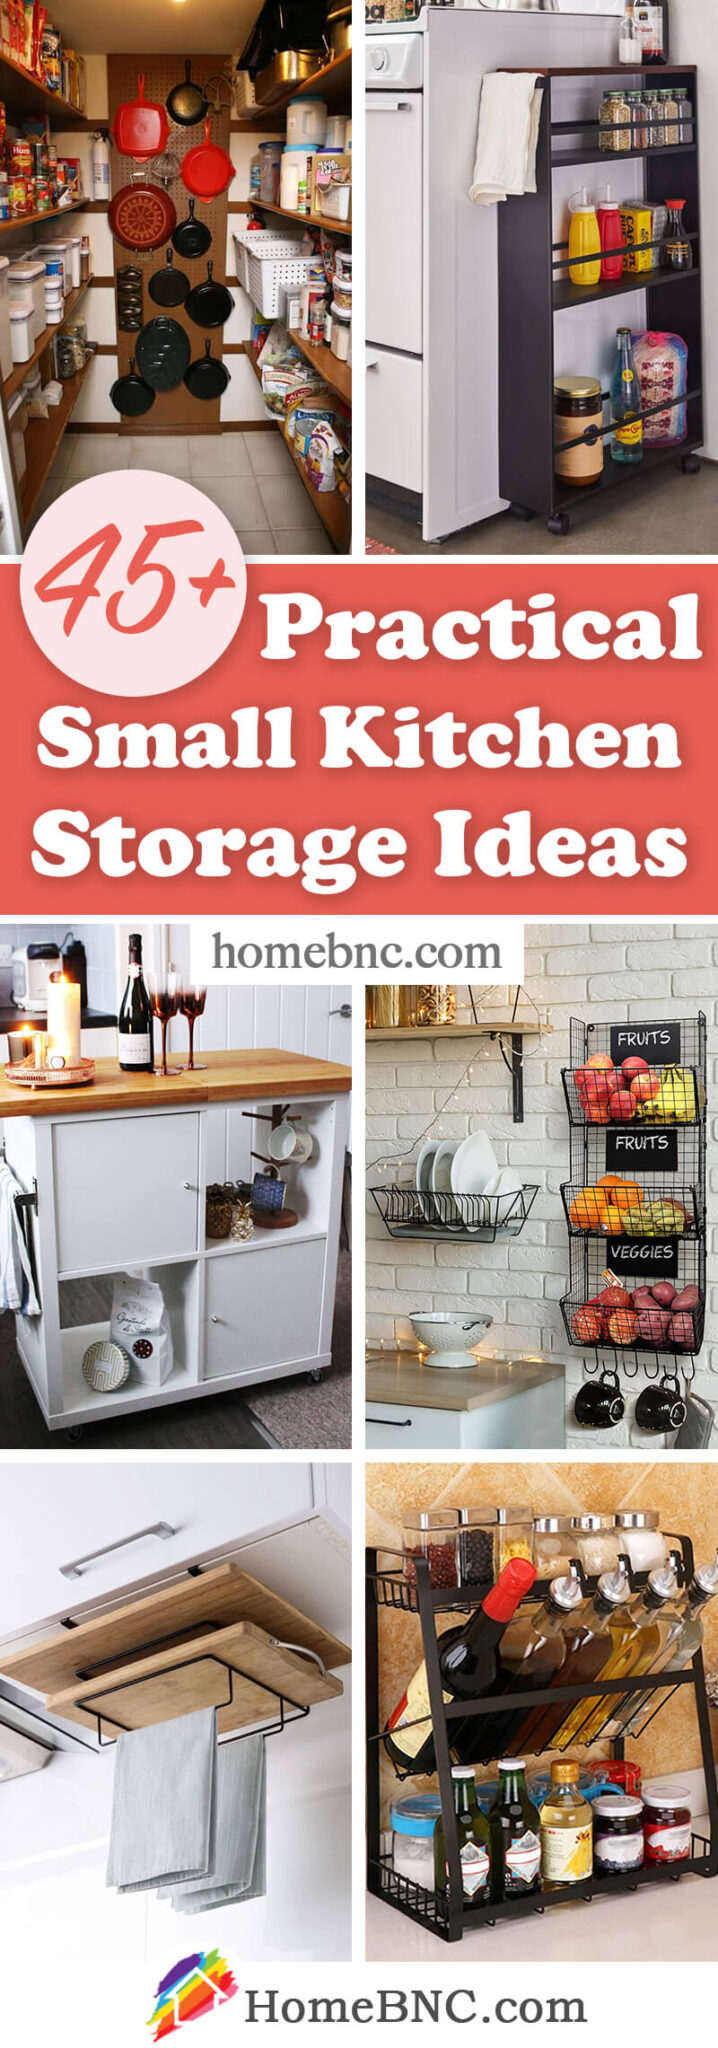 45+ Best Small Kitchen Storage Organization Ideas and Designs for 2021